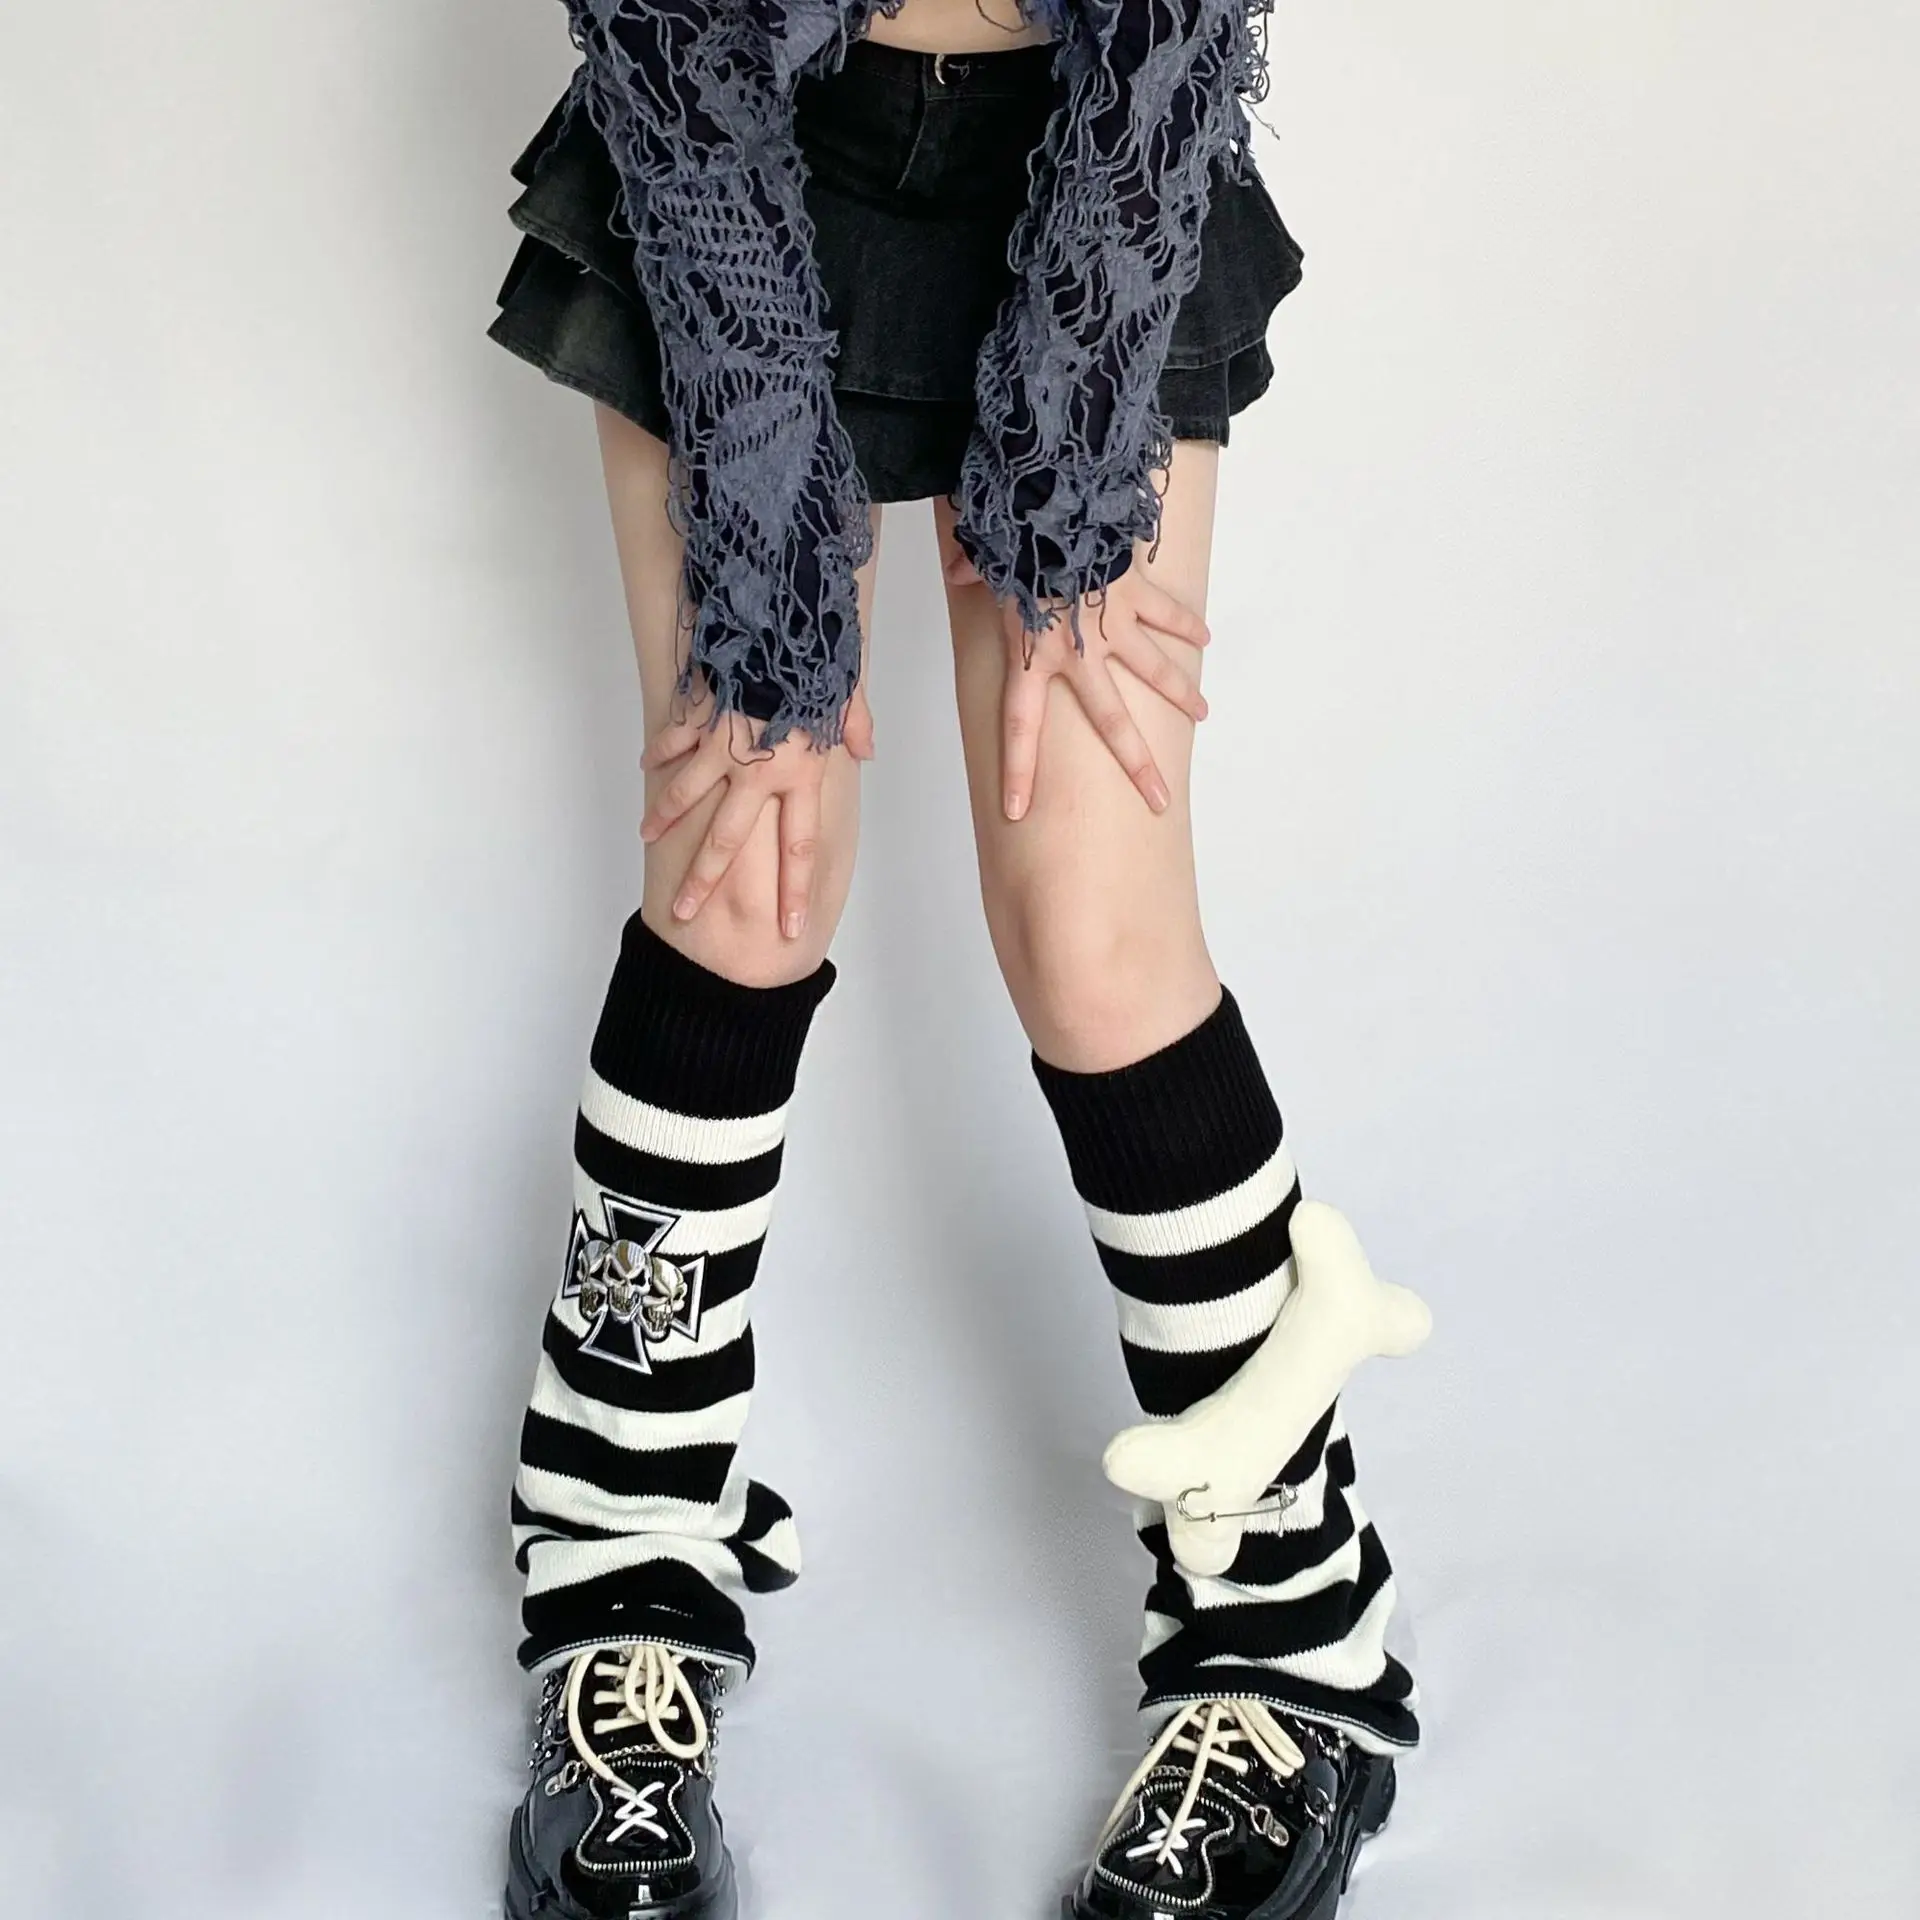 Gothique Skull Cross Leg Warmers Punk Ladies Striped Bone JK Knit Star Punk Diablo Halloween Accessories Knee High Boots Socks